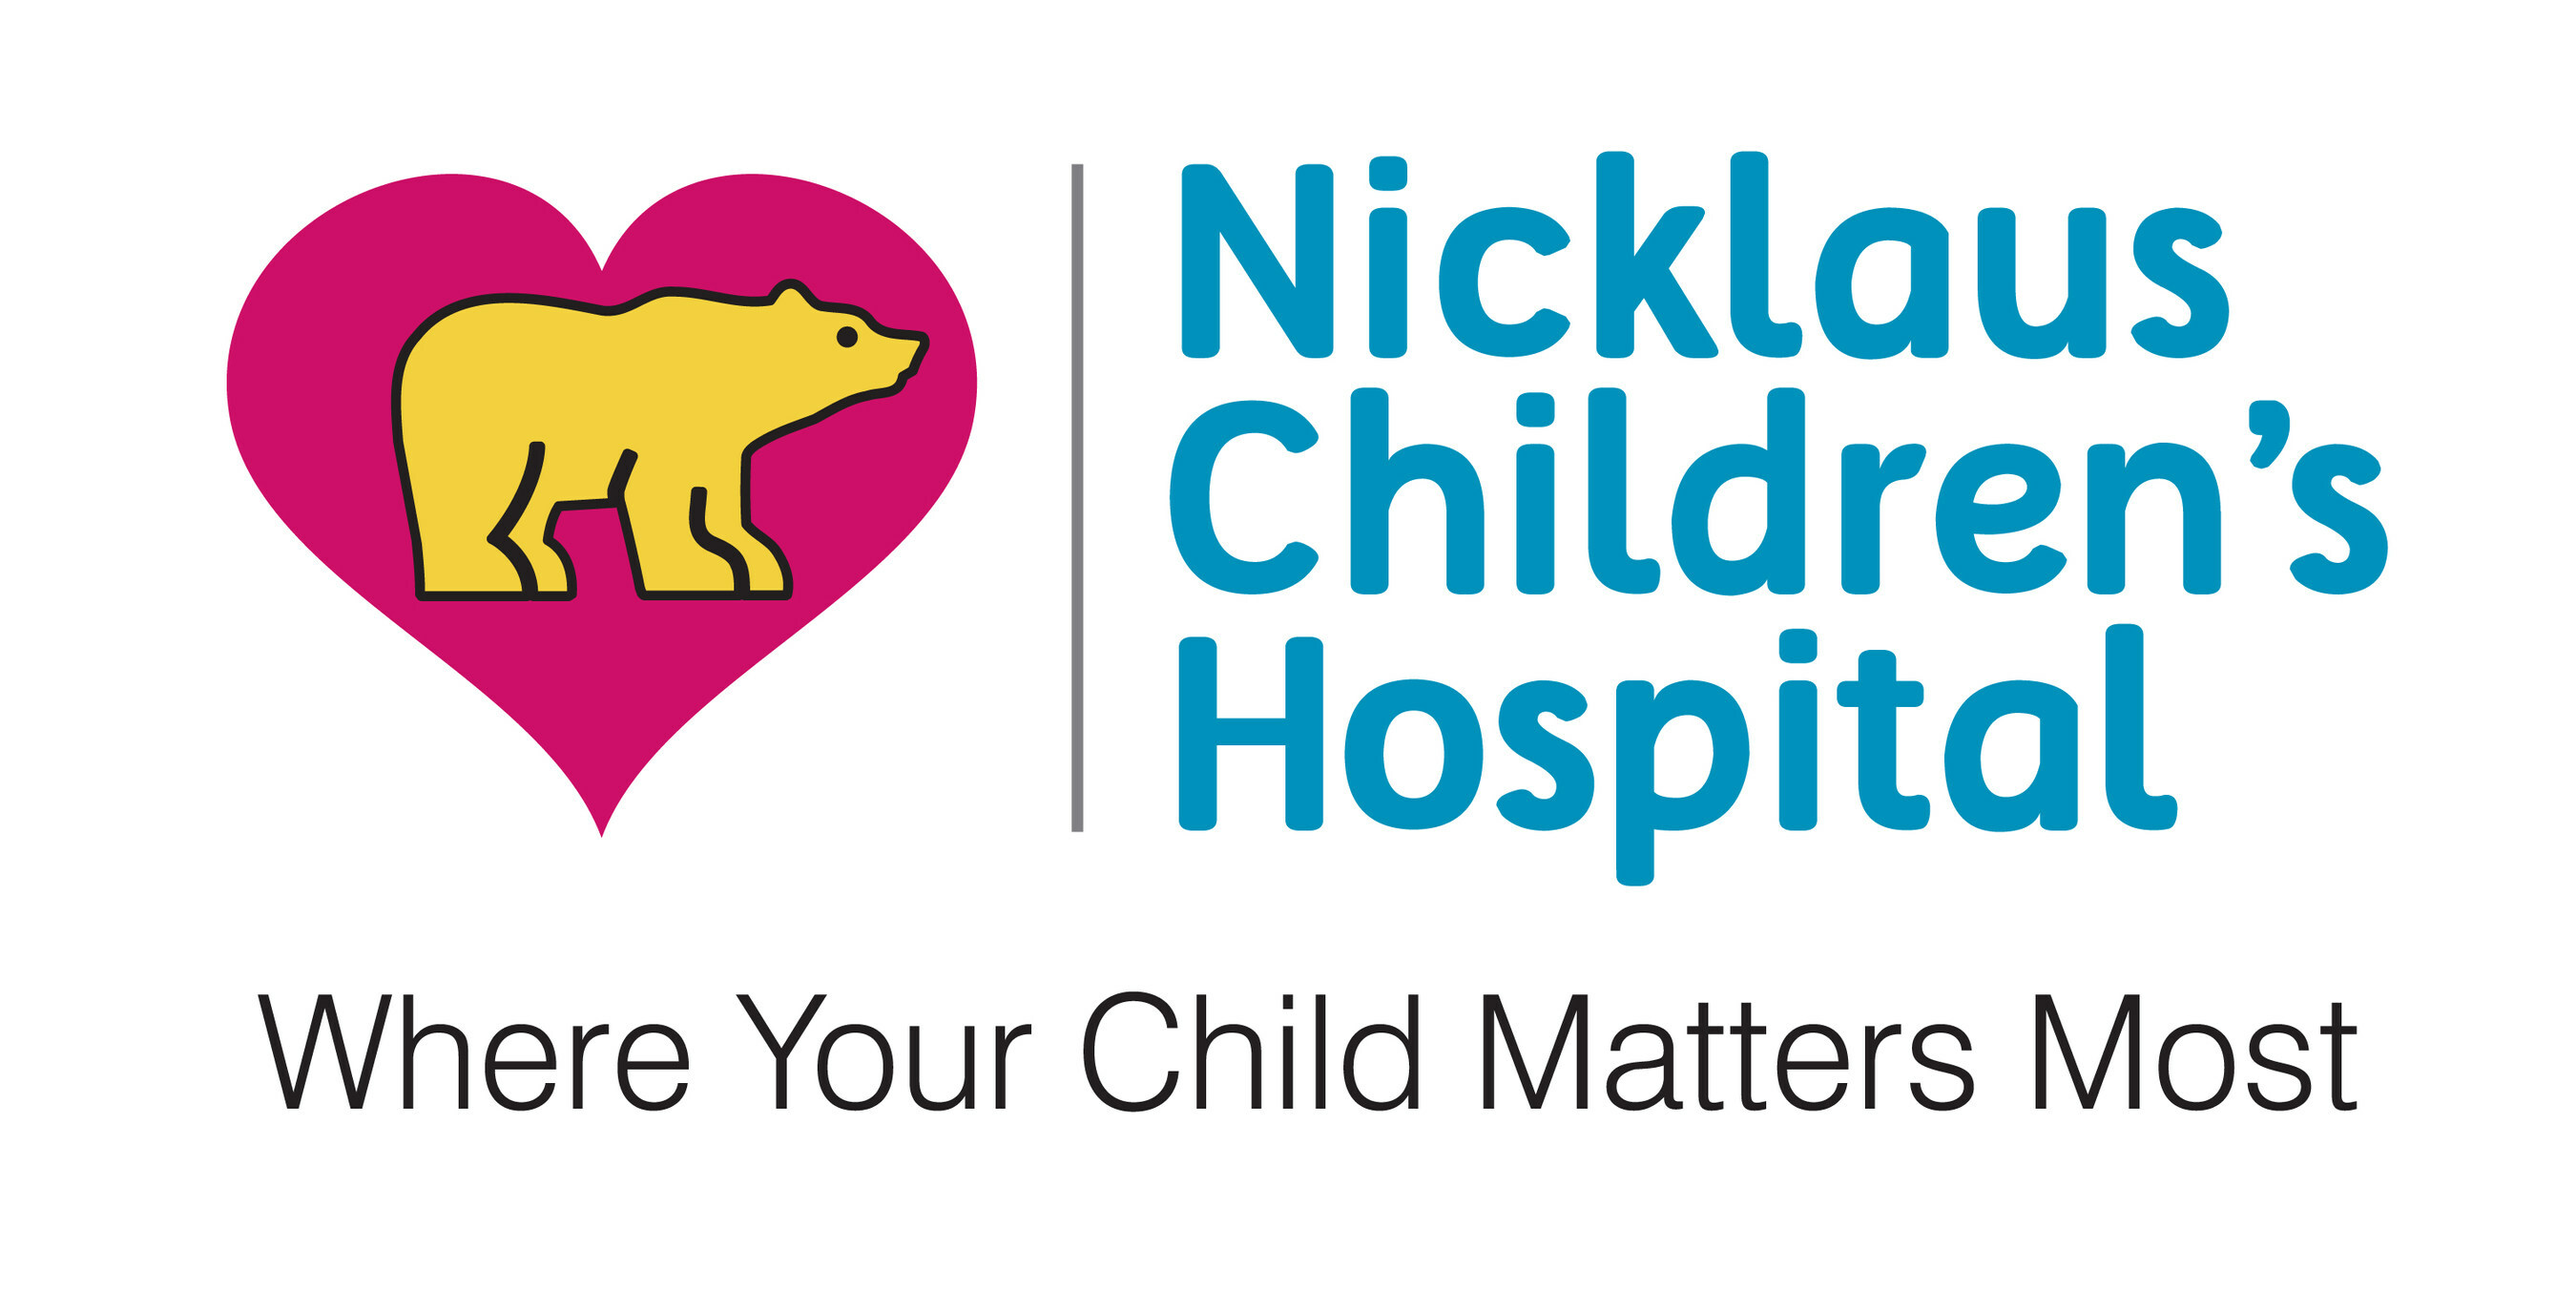 Nicklaus Children's Hospital logo with tagline. (PRNewsfoto/Nicklaus Children's Health System)